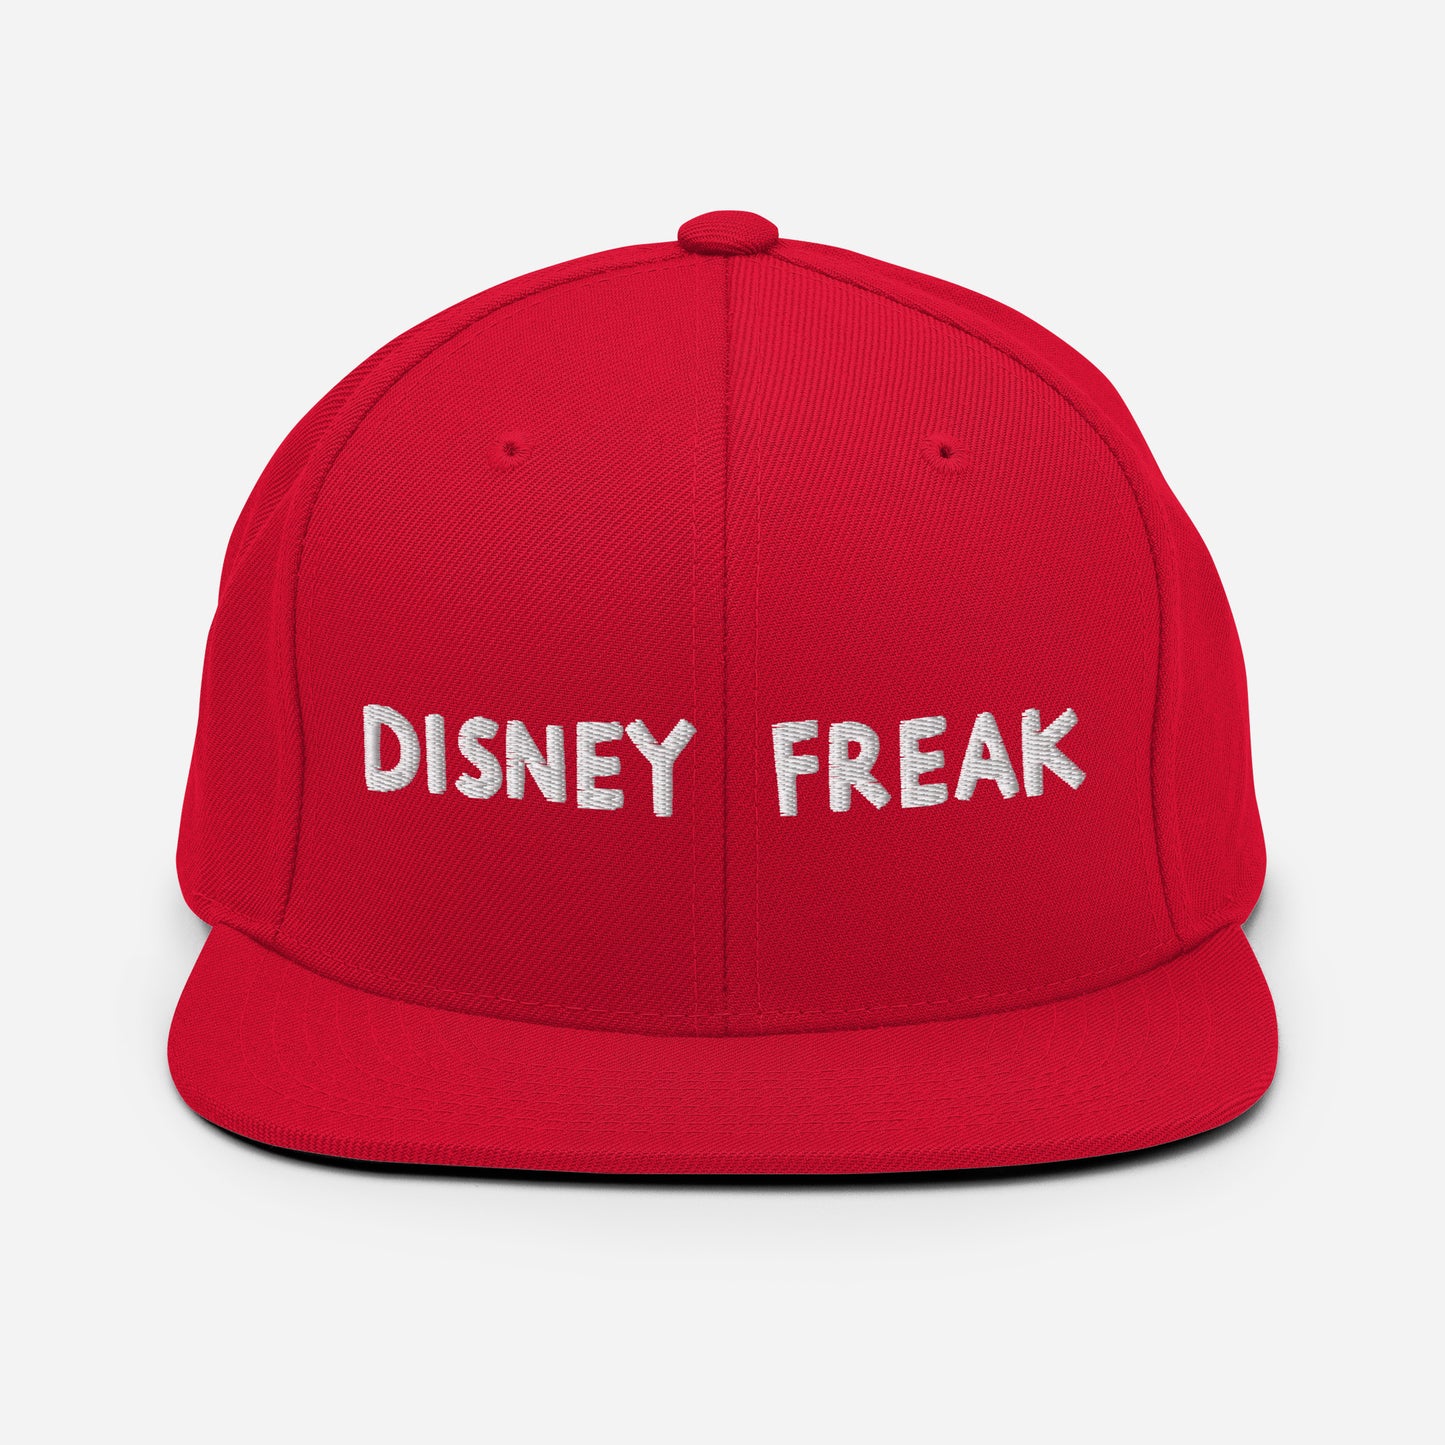 DISNEY FREAK - Snapback Hat